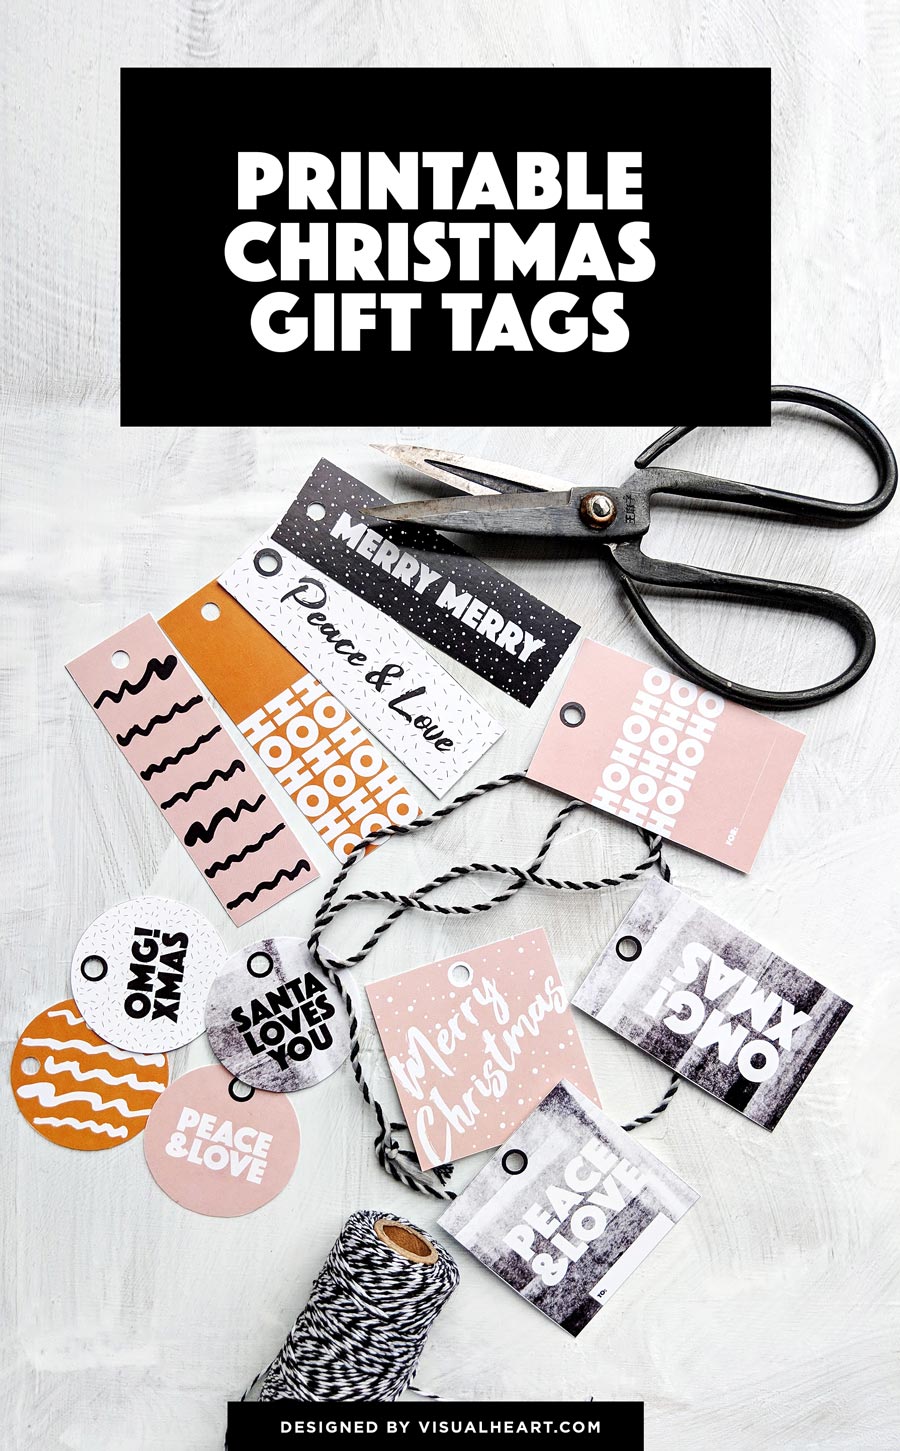 Free printable modern Christmas gift tags designed by @visualheart www.visualheart.com